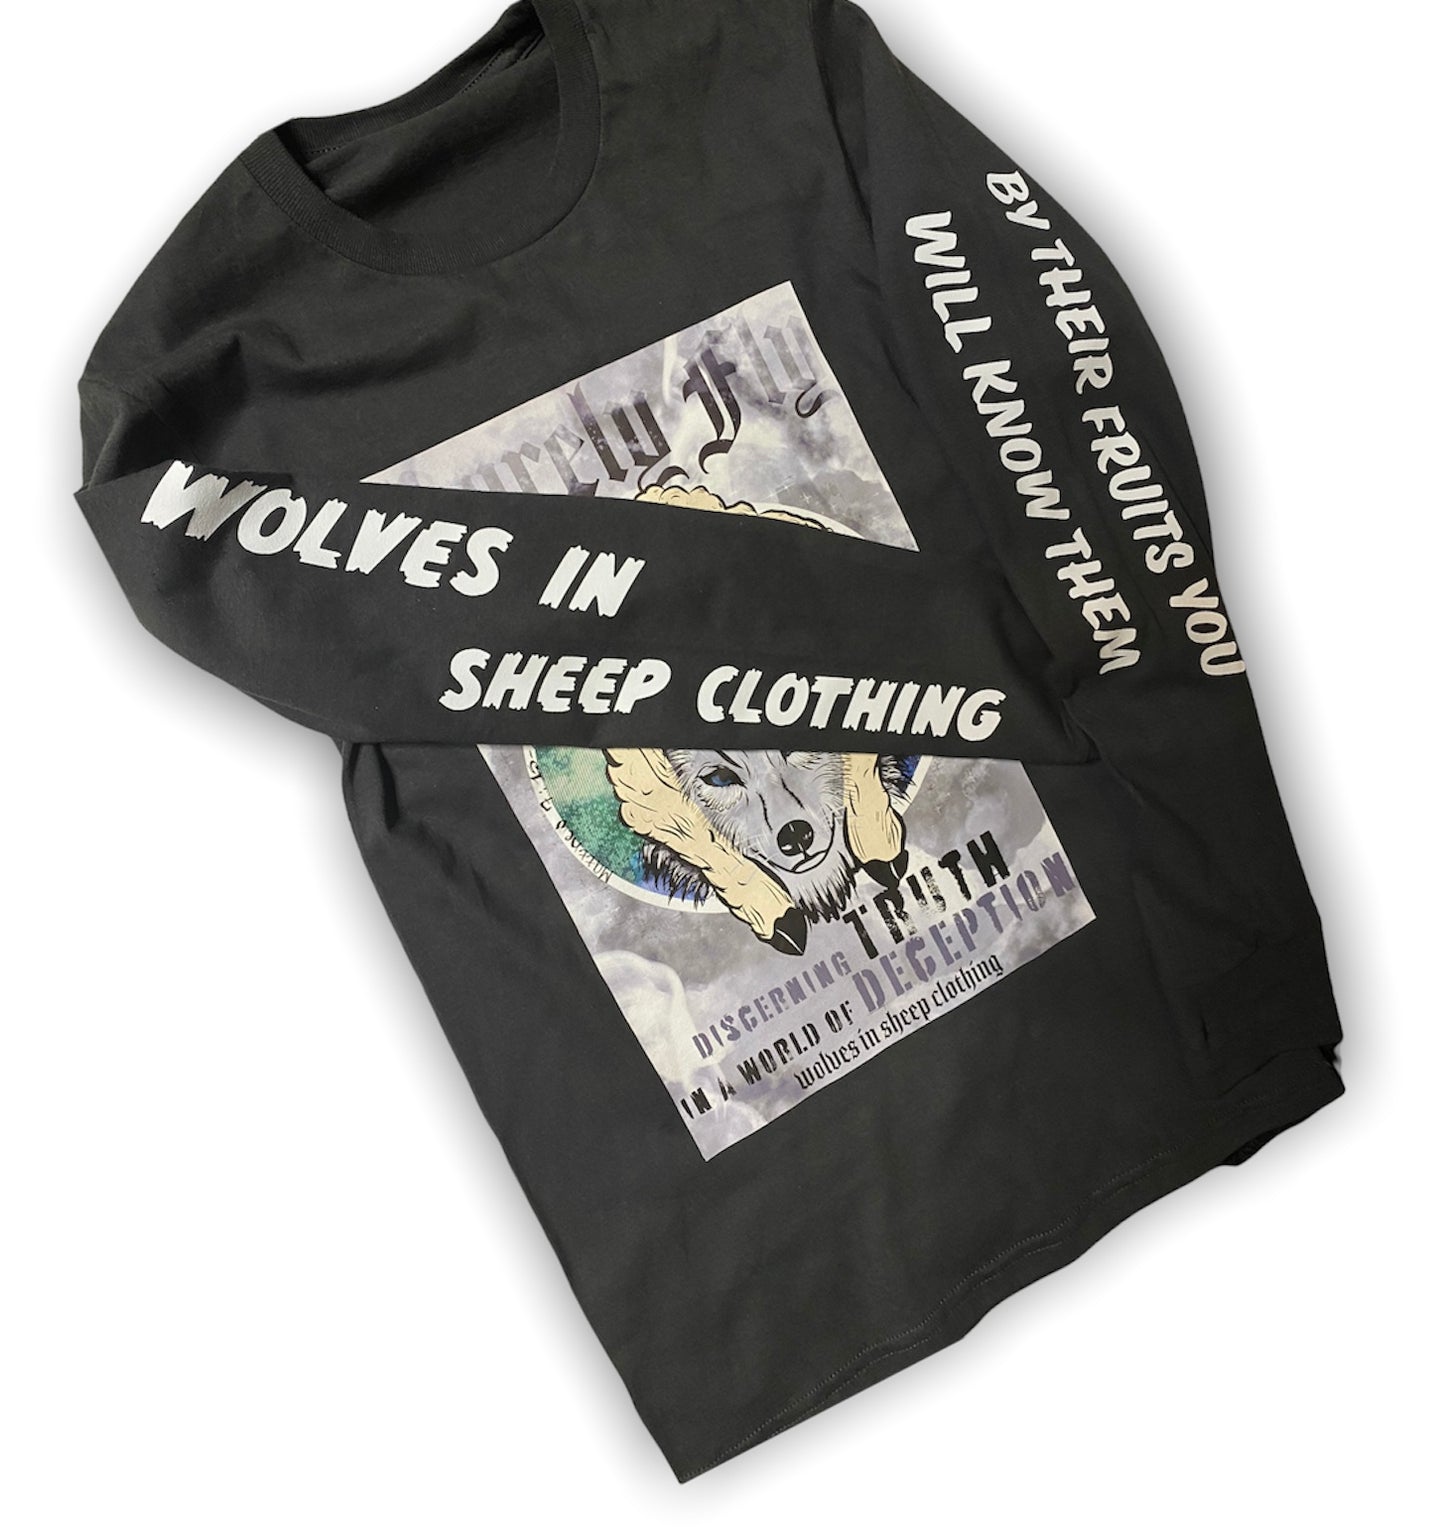 Wolves in Sheep clothing - Unisex (Front & back designed)